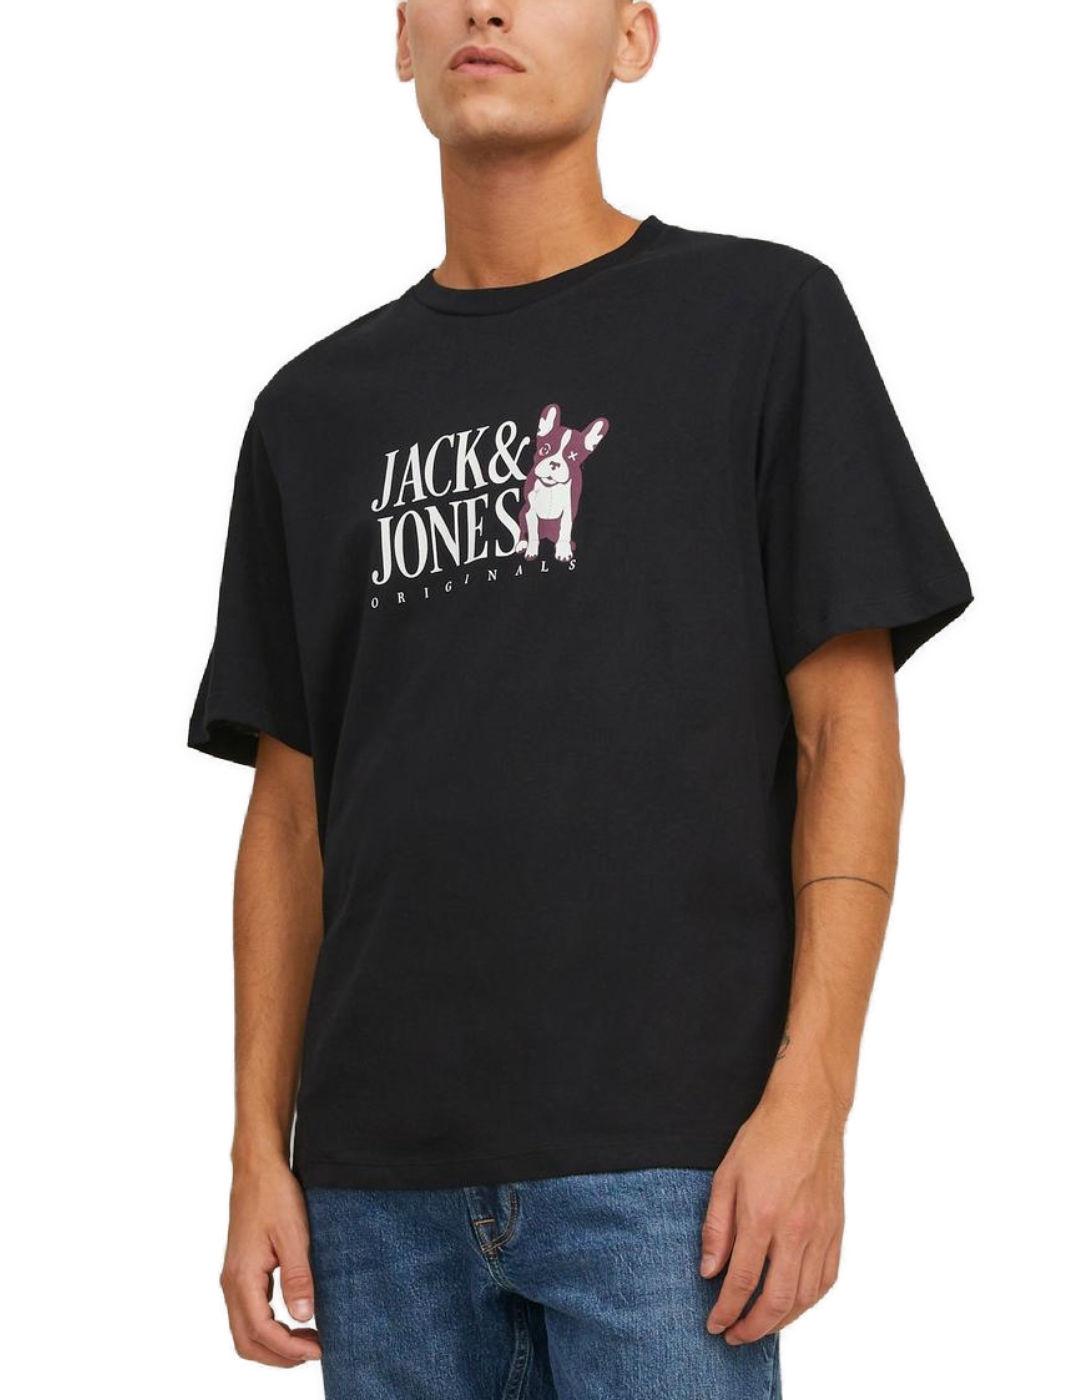 Camiseta Jack&Jones Orbeware negra manga corta para hombre